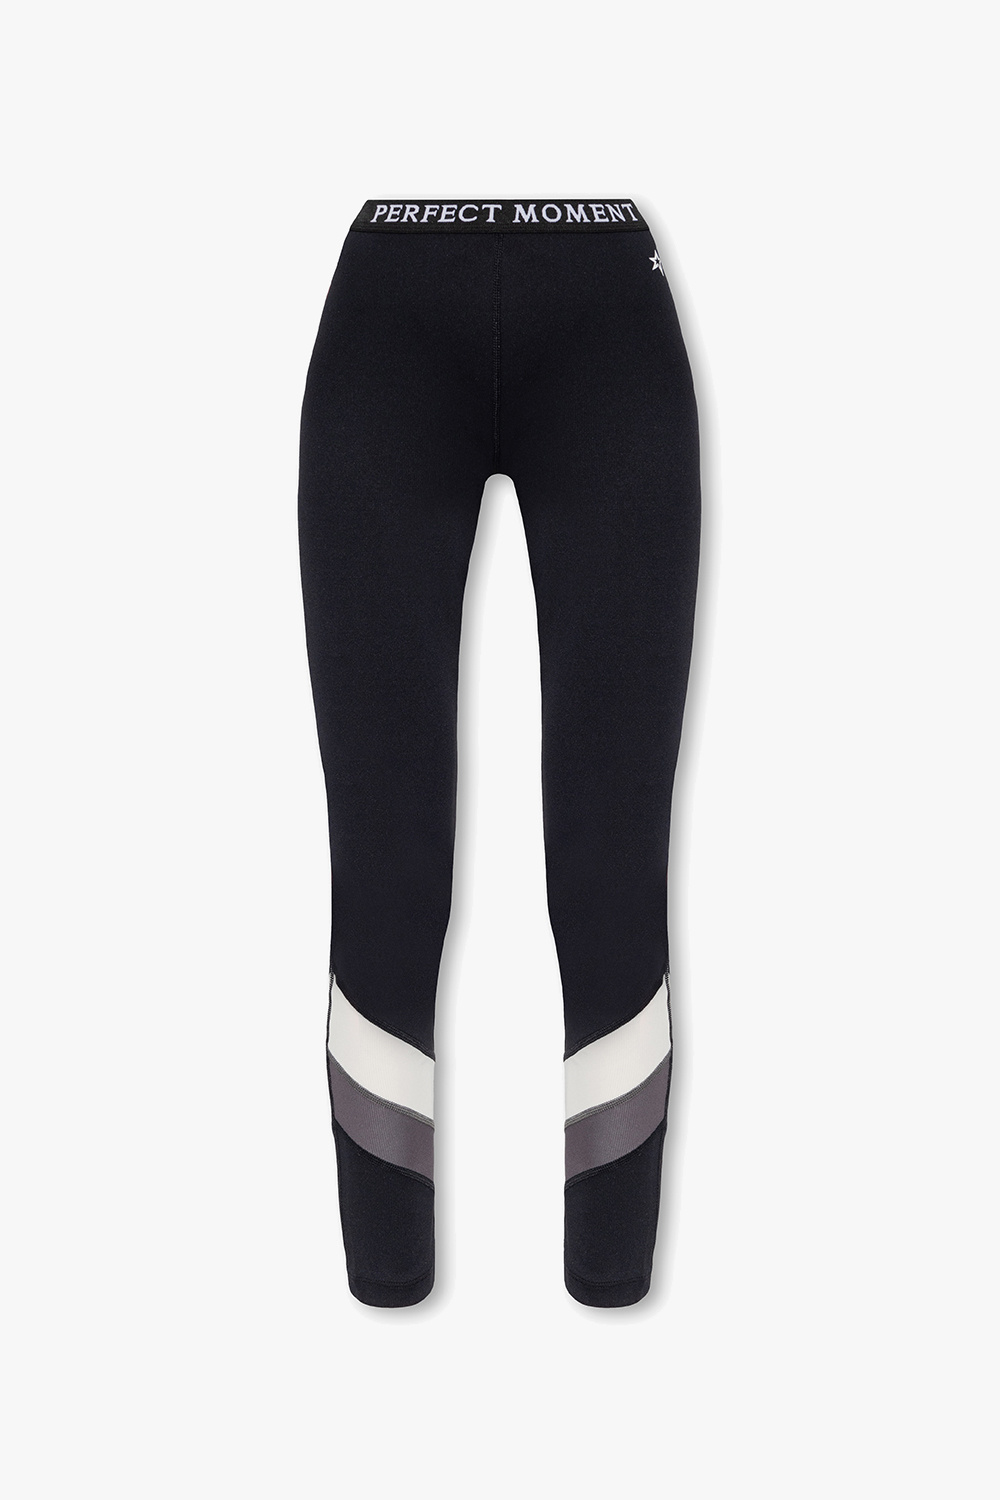 Black Thermal leggings Perfect Moment - IetpShops Japan - YEEZY BOOST 350  V2 MX Oat Pants